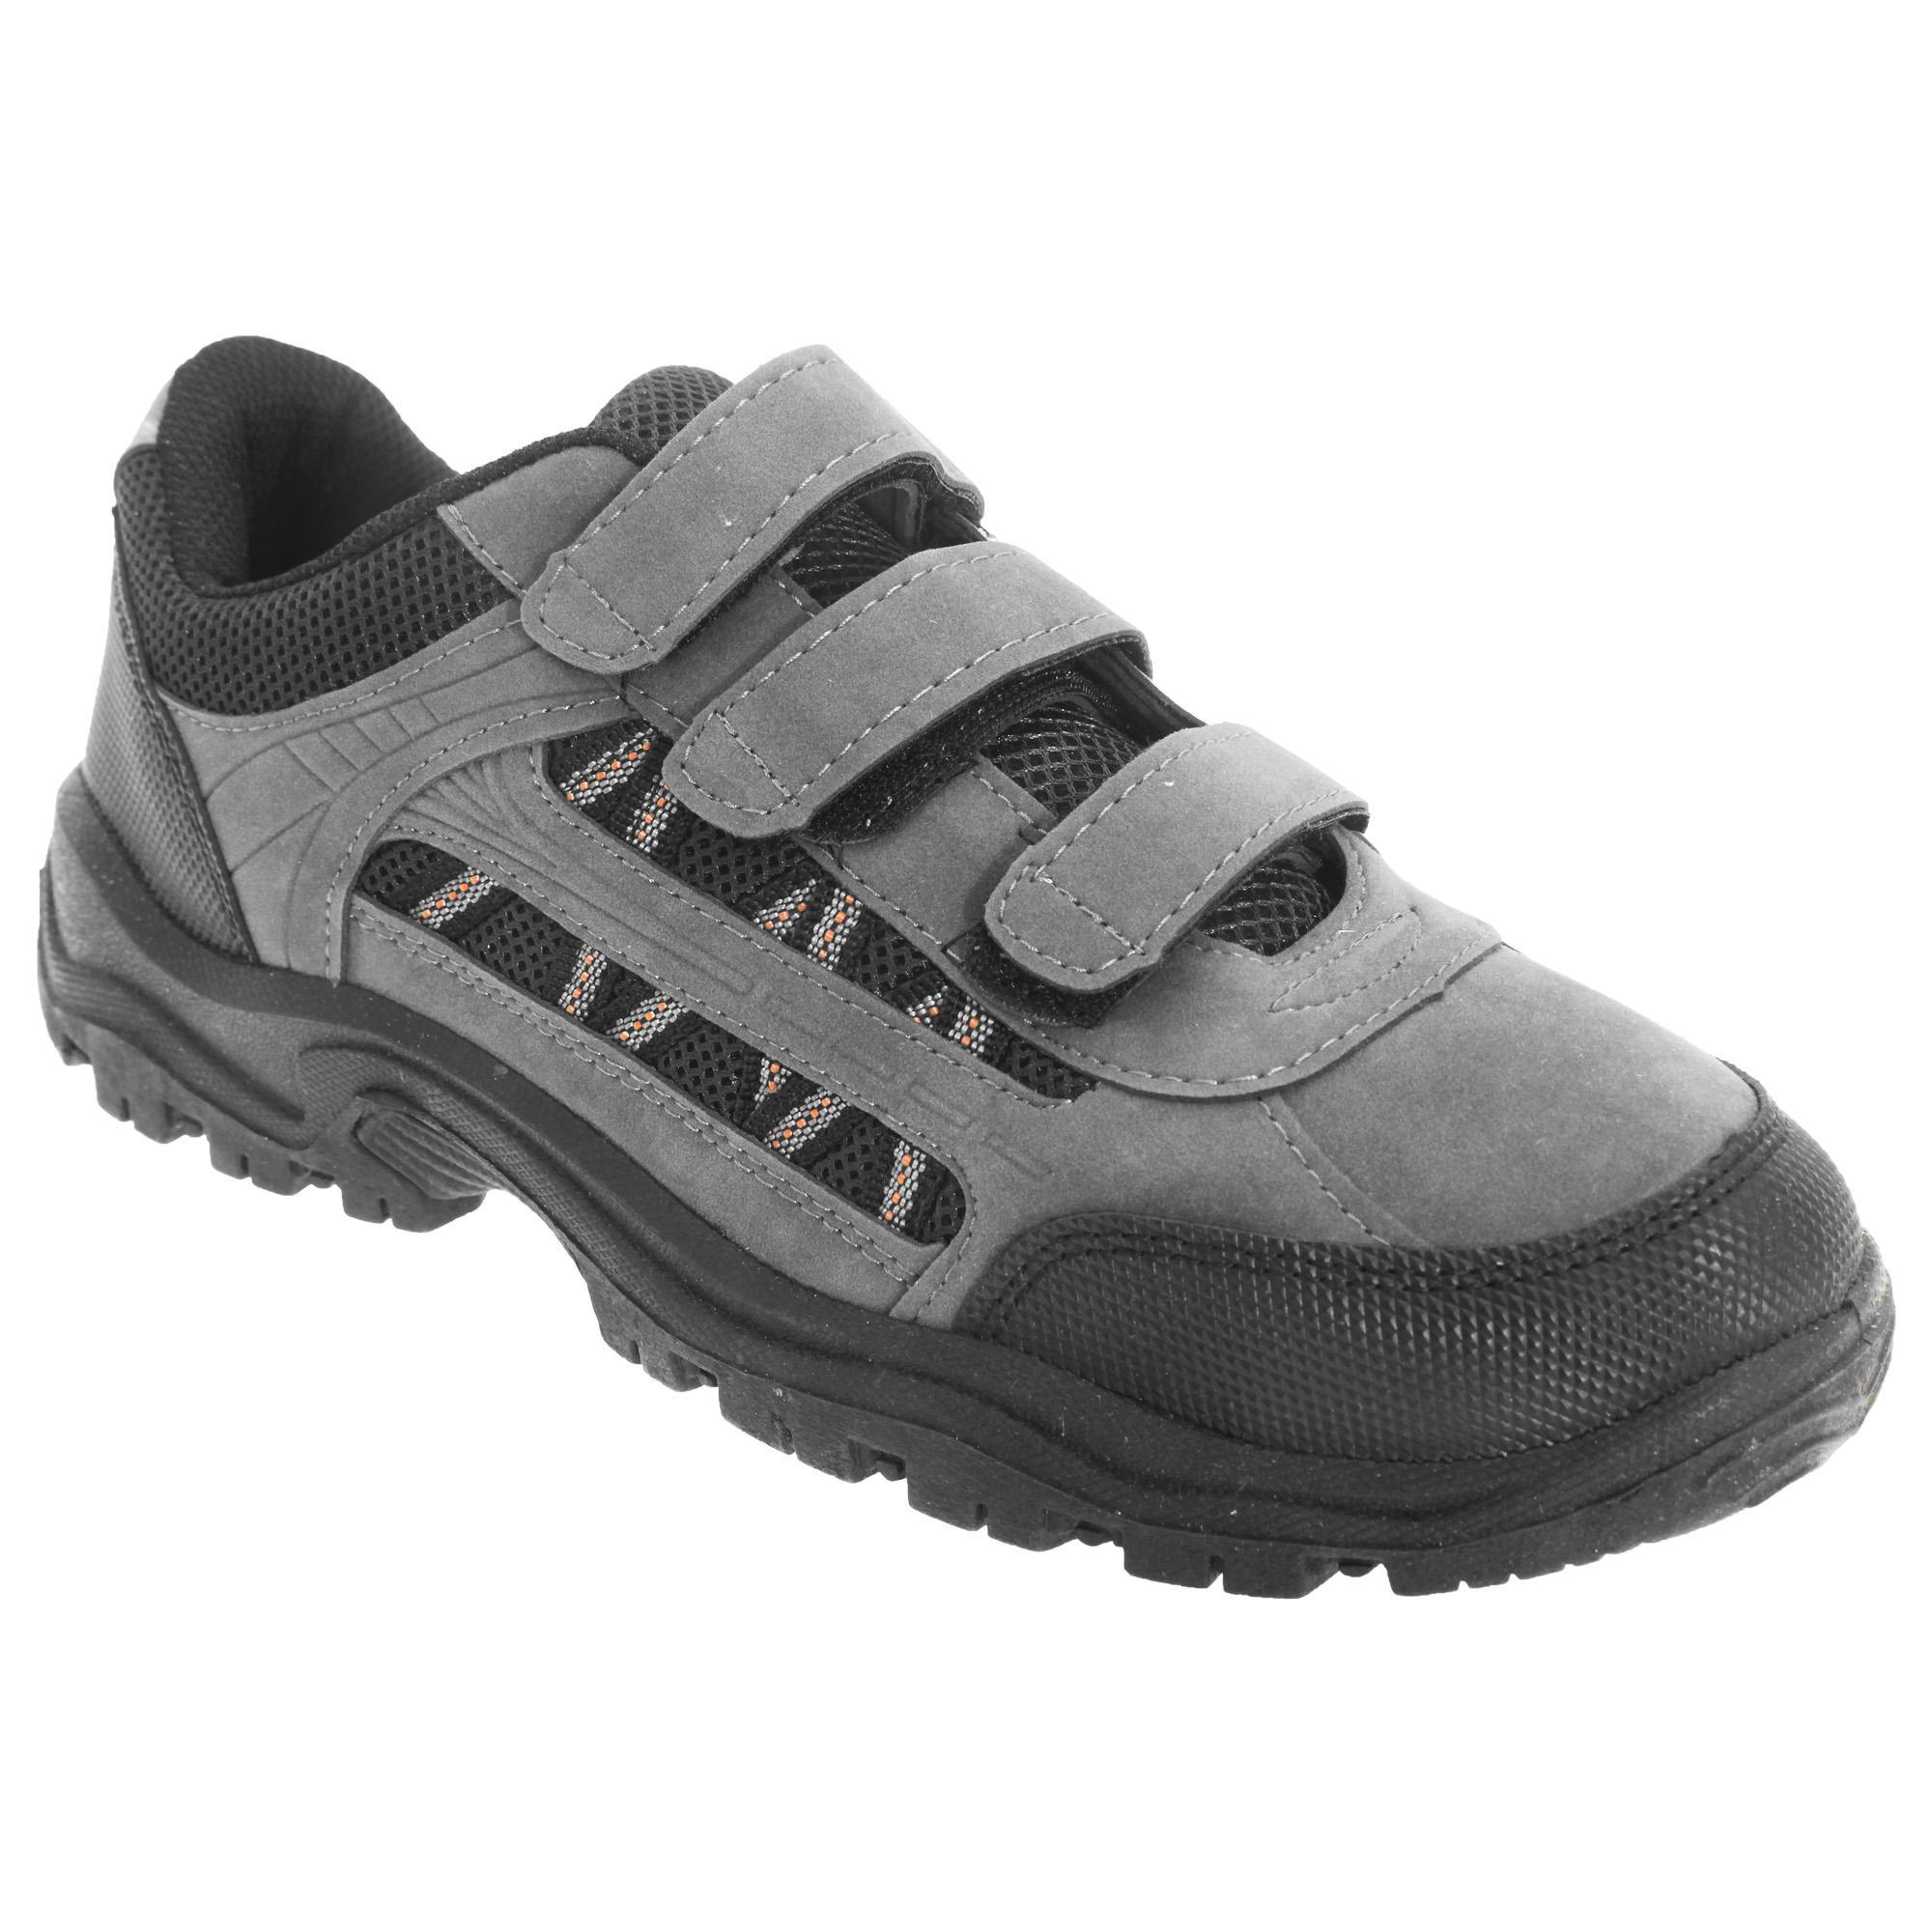 Dek Mens Ascend Triple Touch Fastening Trek Hiking Trail Shoes (Grey/Black) (13 UK)